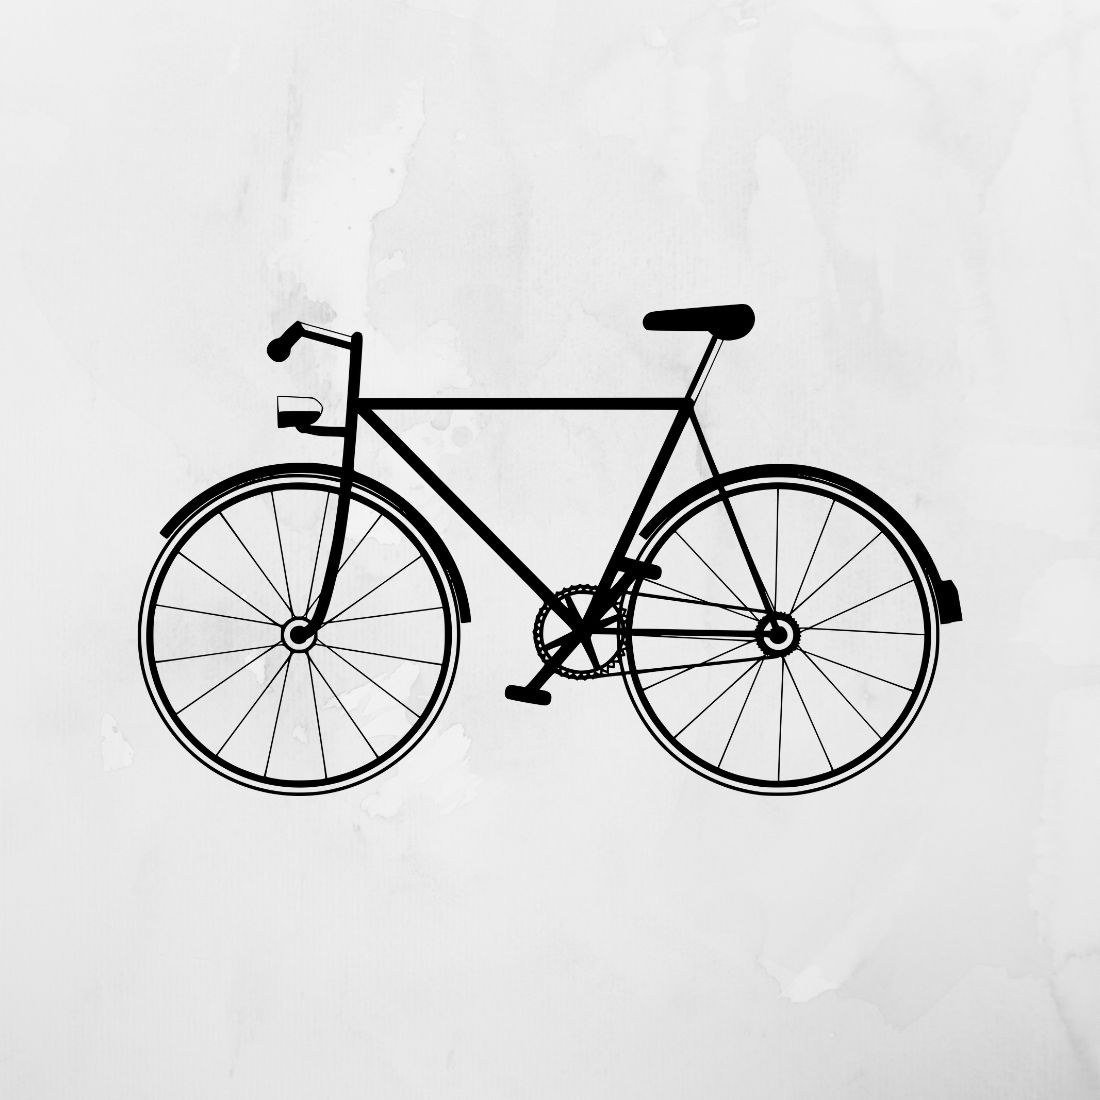 Bicycle SVG variant1.